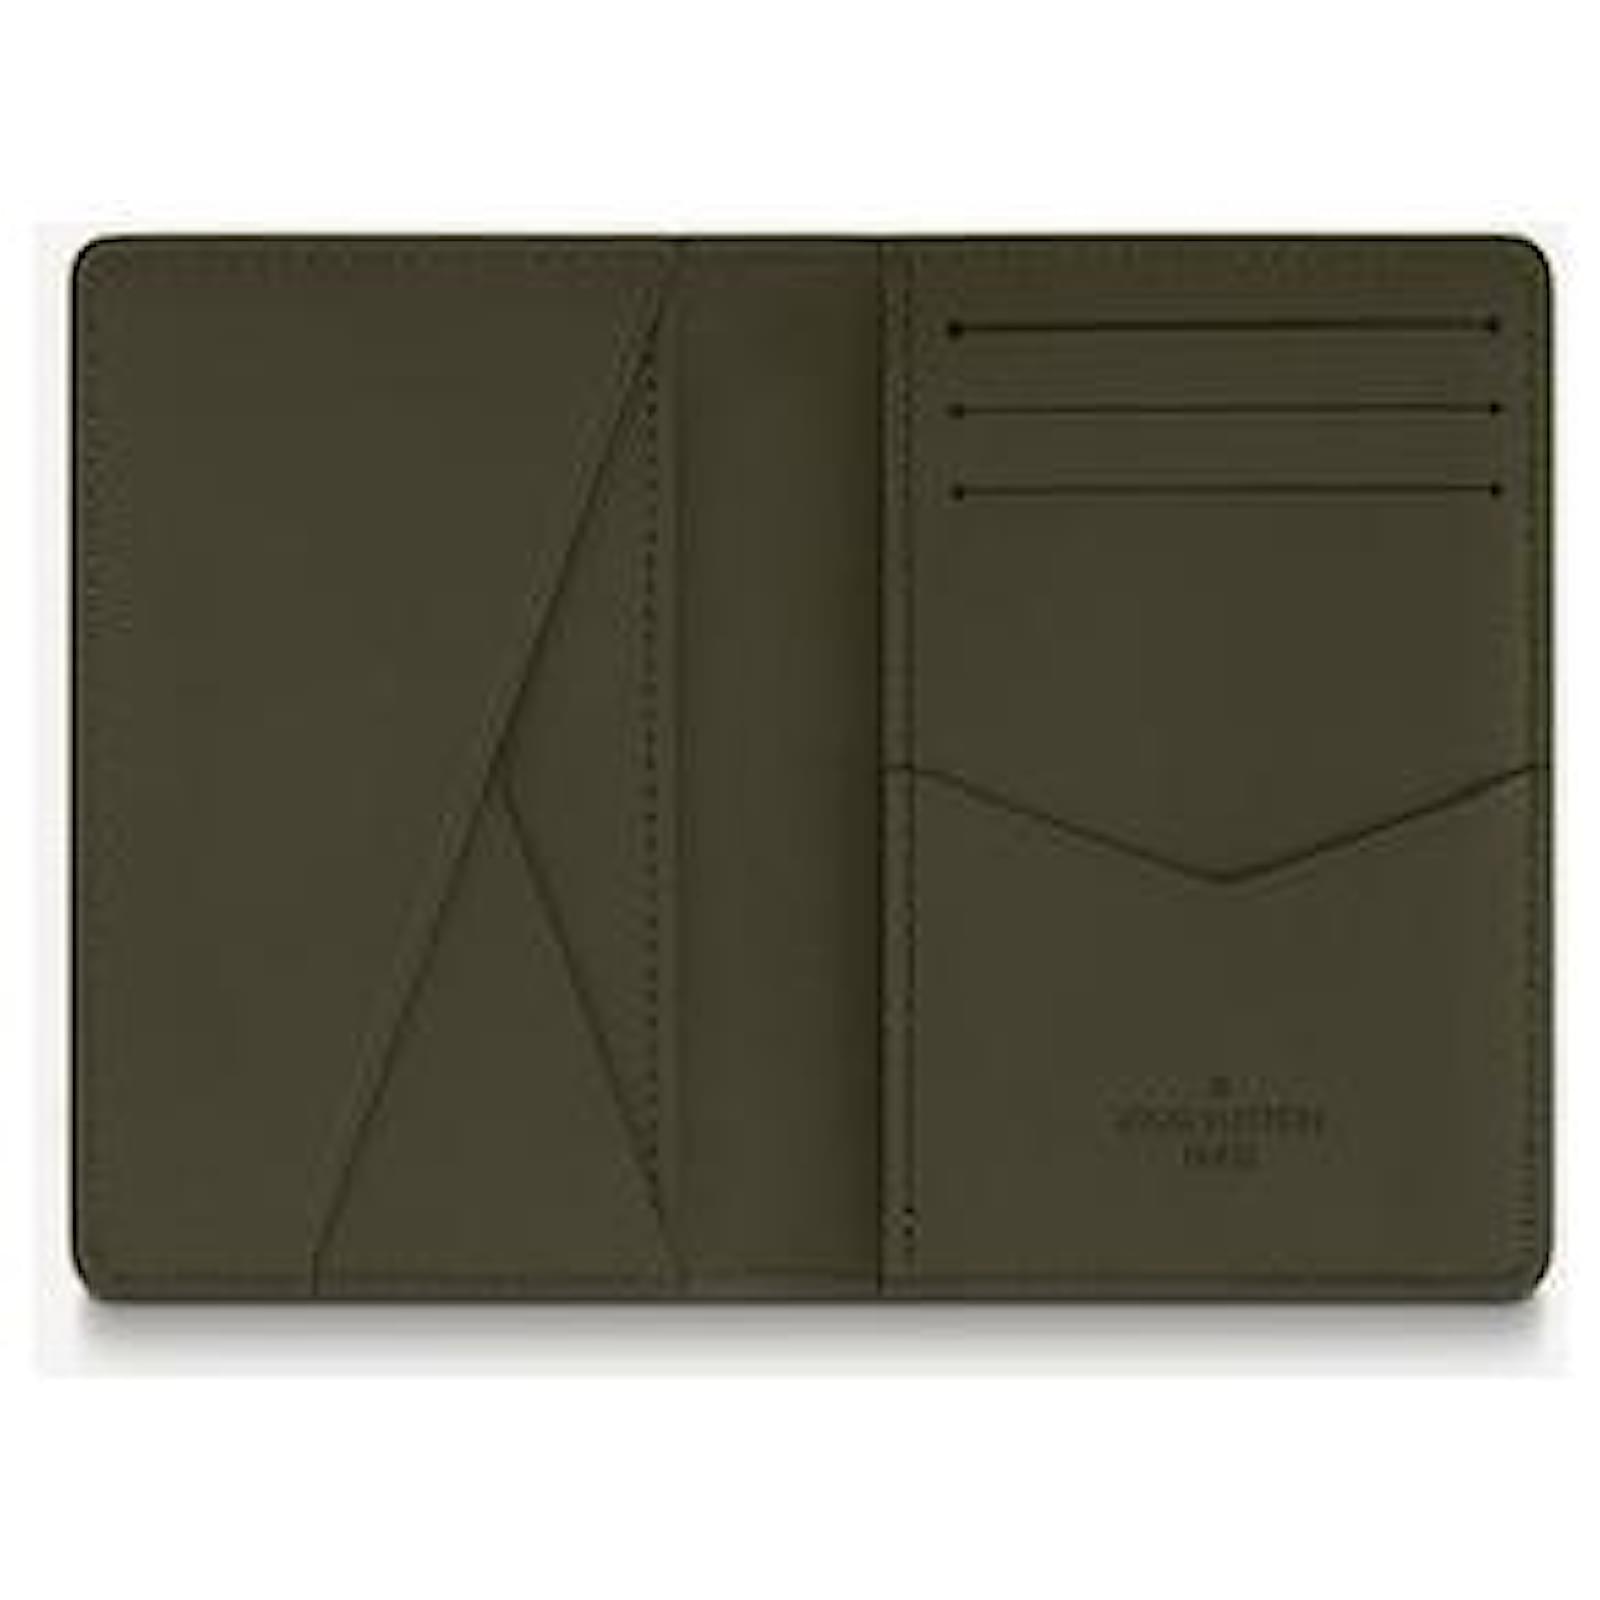 Shop Louis Vuitton AEROGRAM Pocket organizer (ORGANIZER DE POCHE